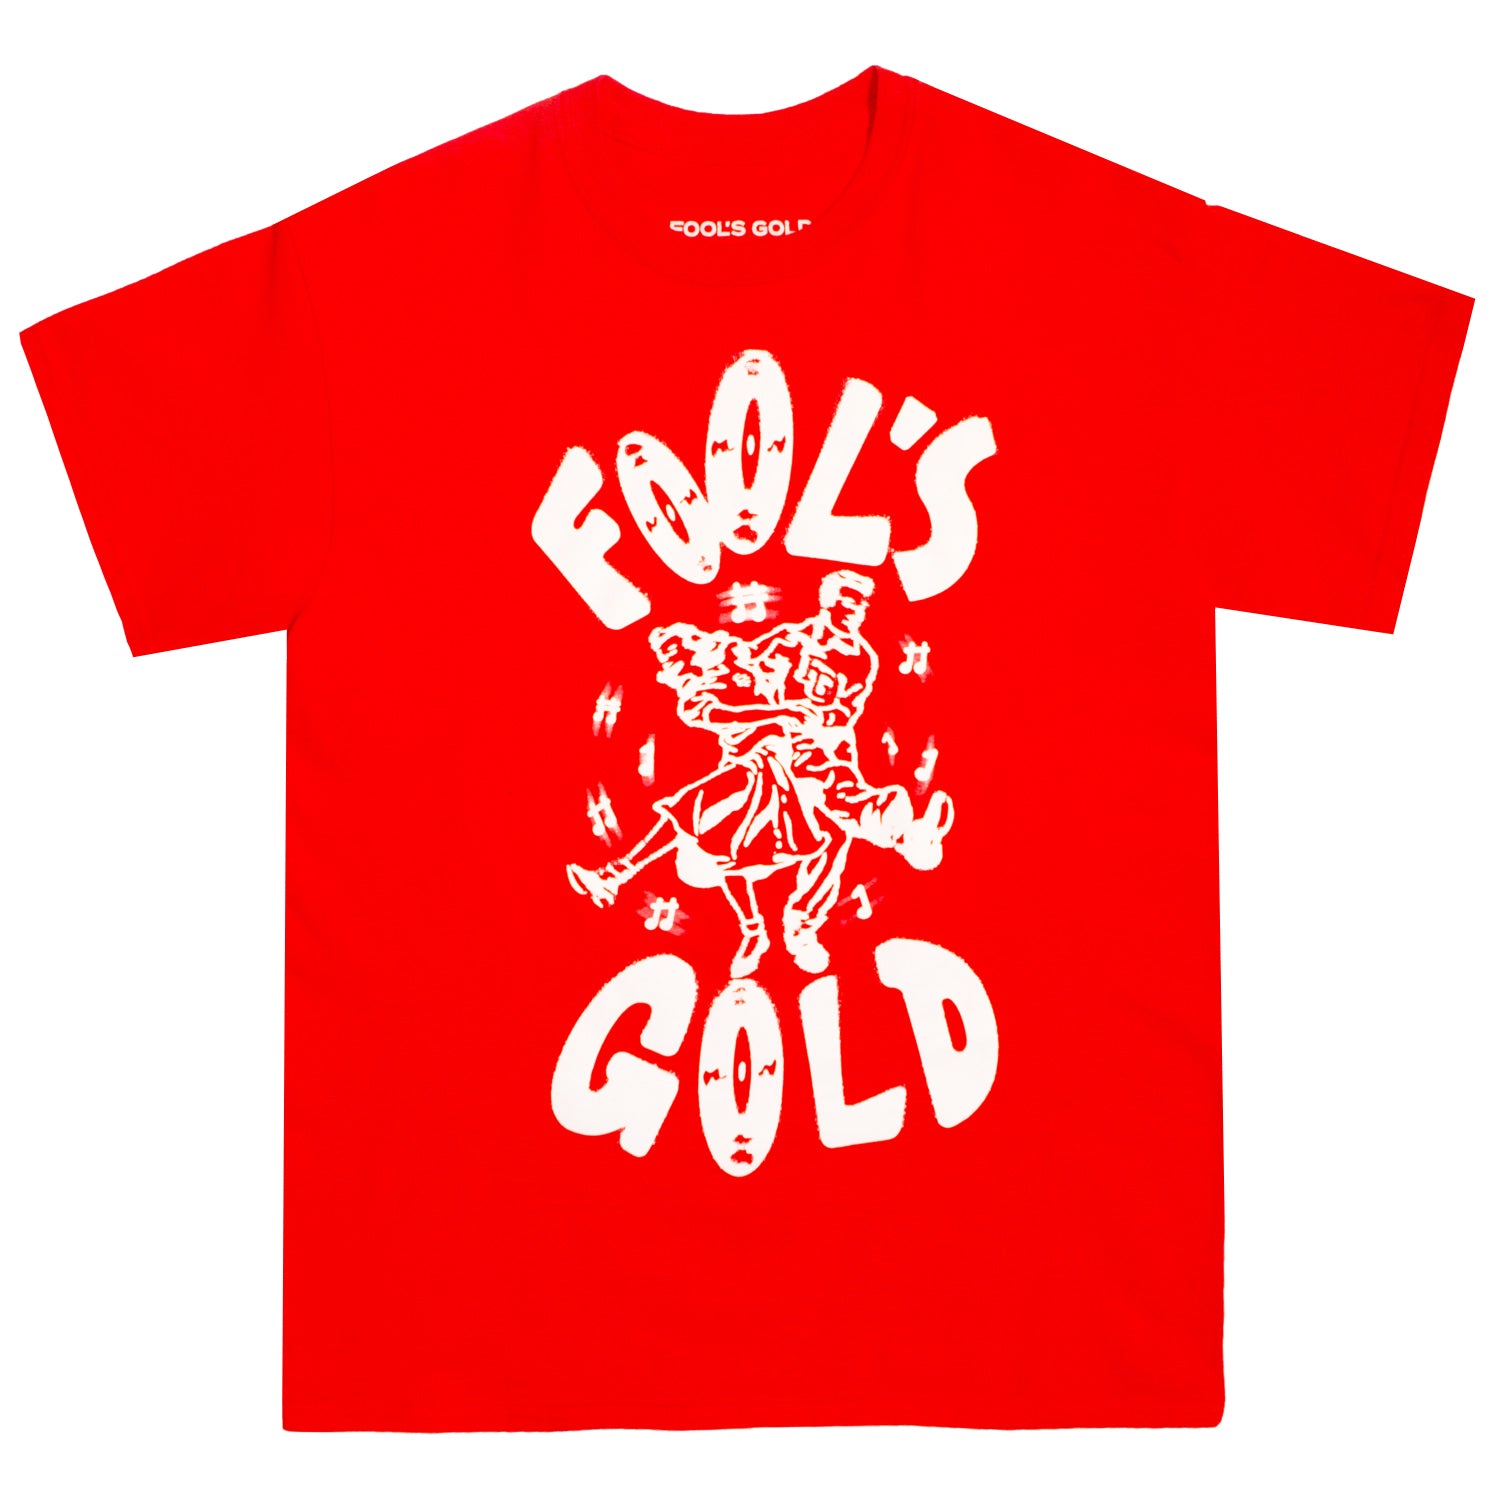 Fool’s Gold “Dance” Tee - Red